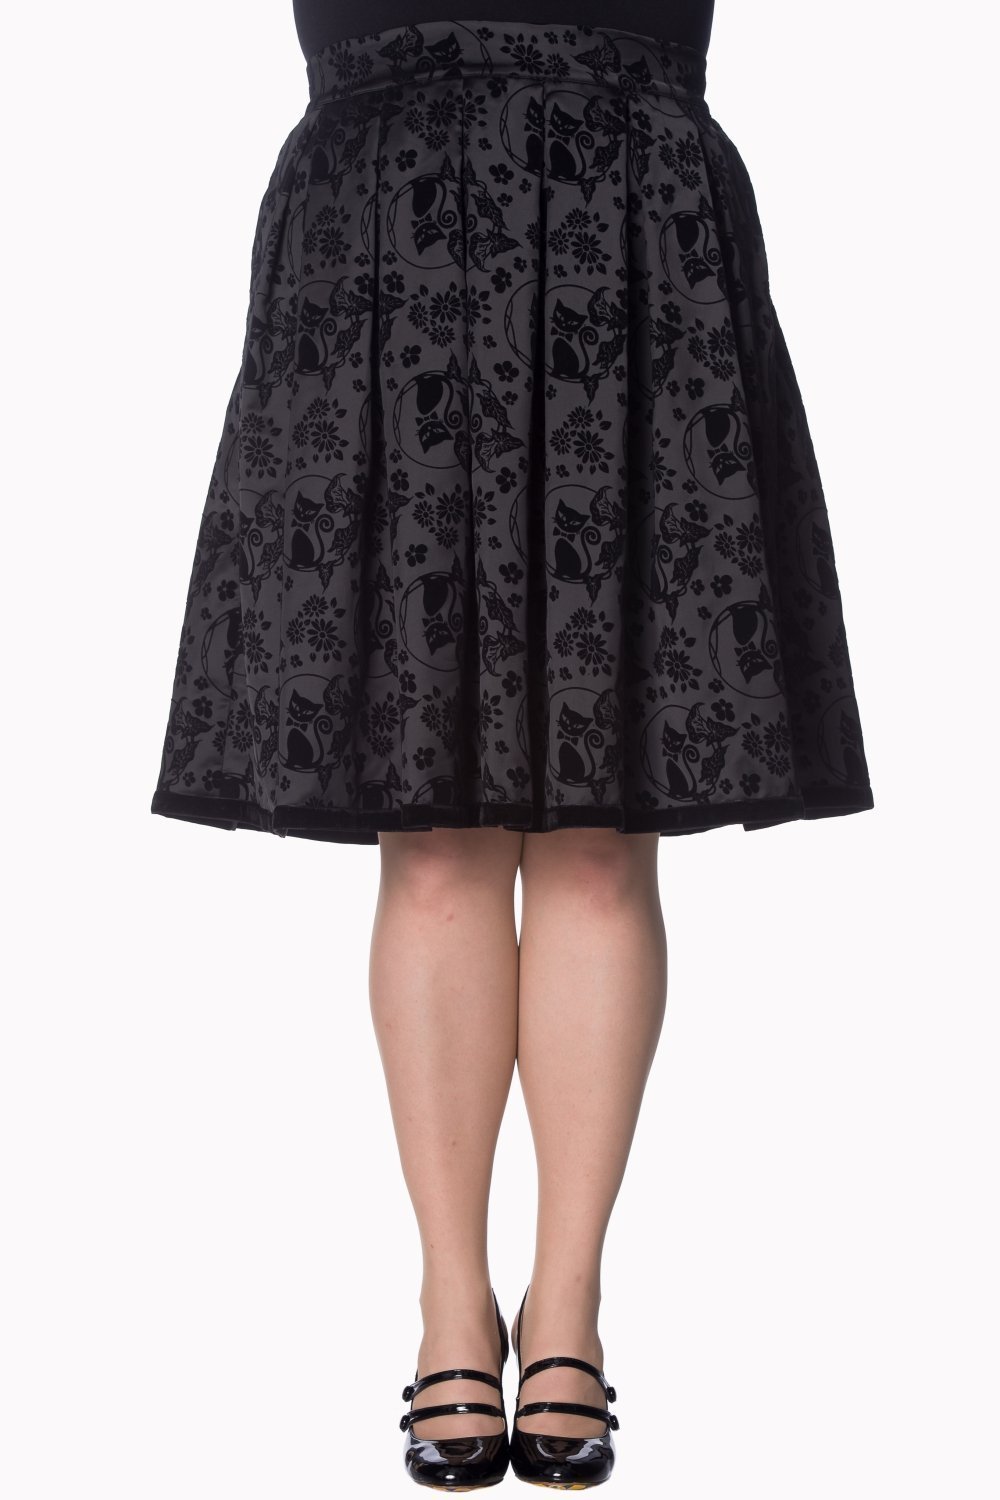 Sia Bella Skirt - size XS - darkling.be